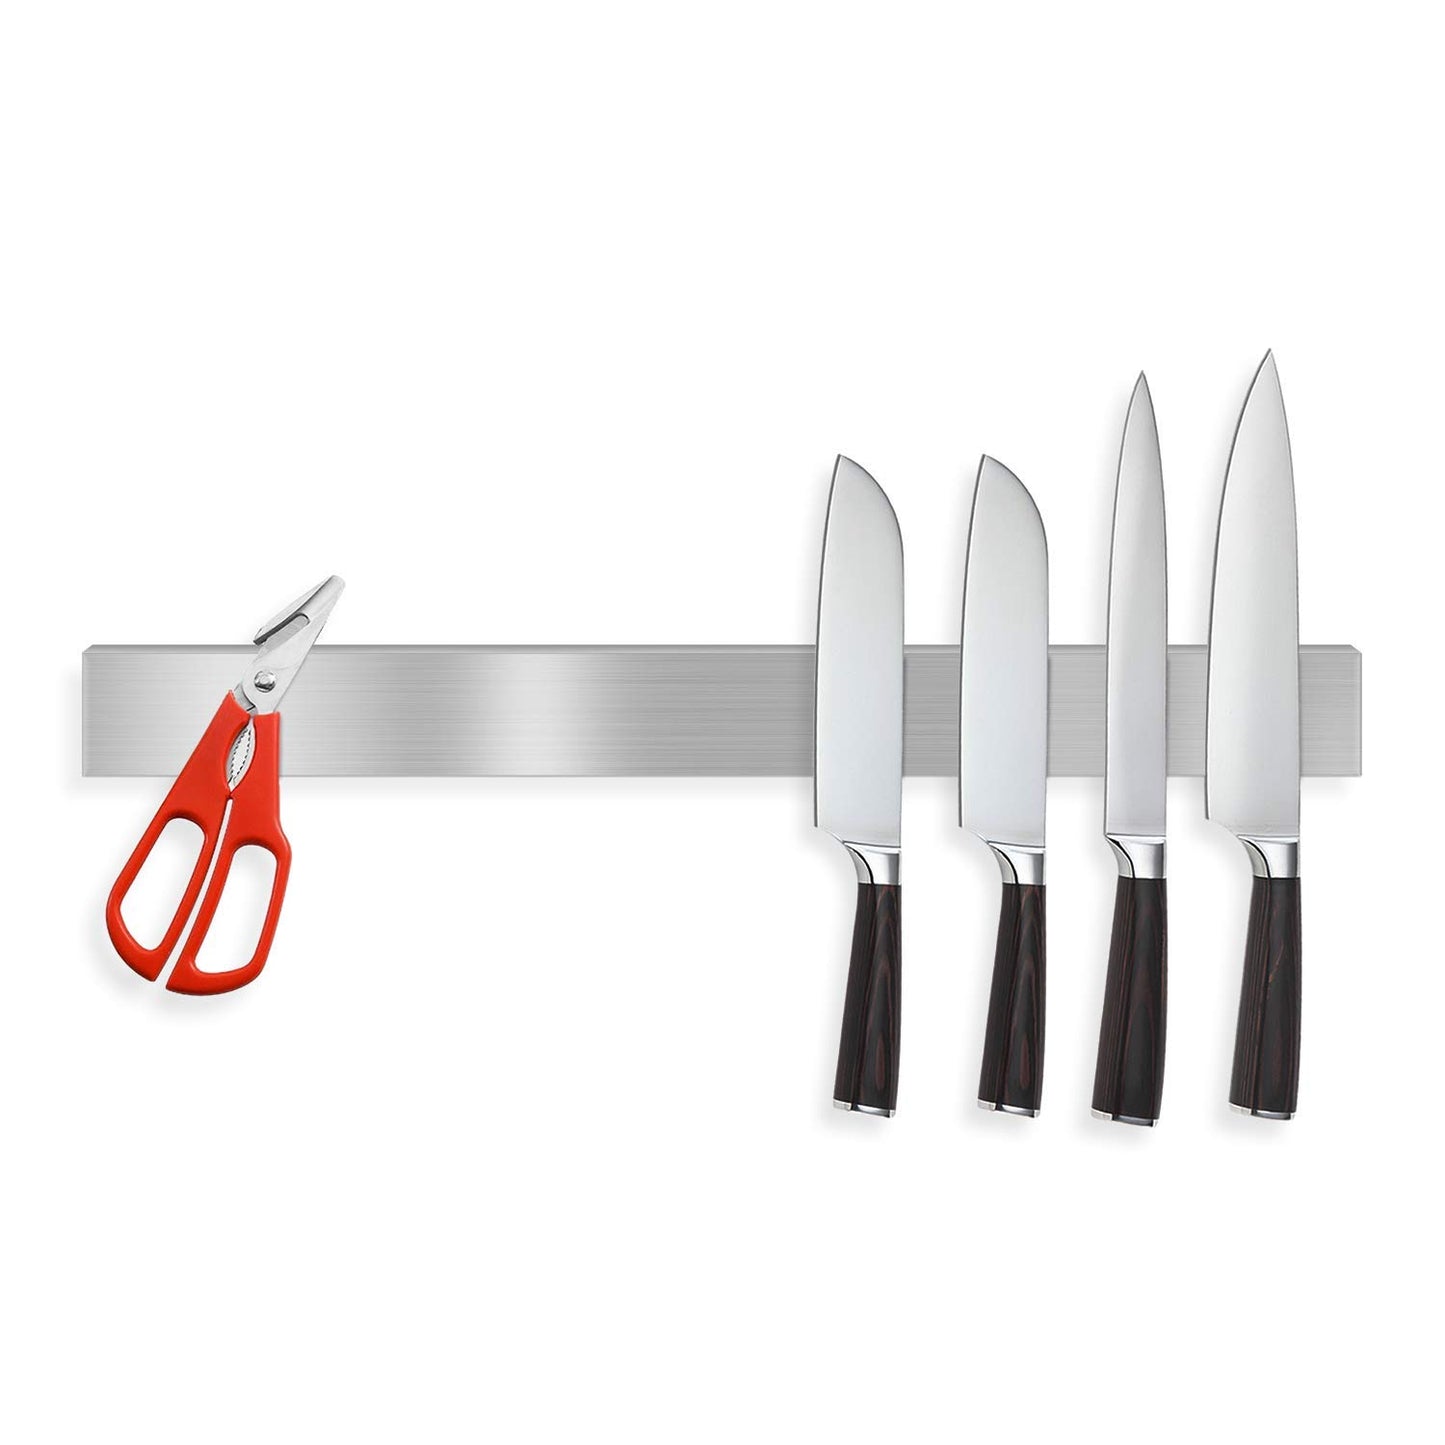 Magnetic Knife Holder/Wall Utensil Storage Rack/Stainless Steel Knives Strip - 50cm(20inch)